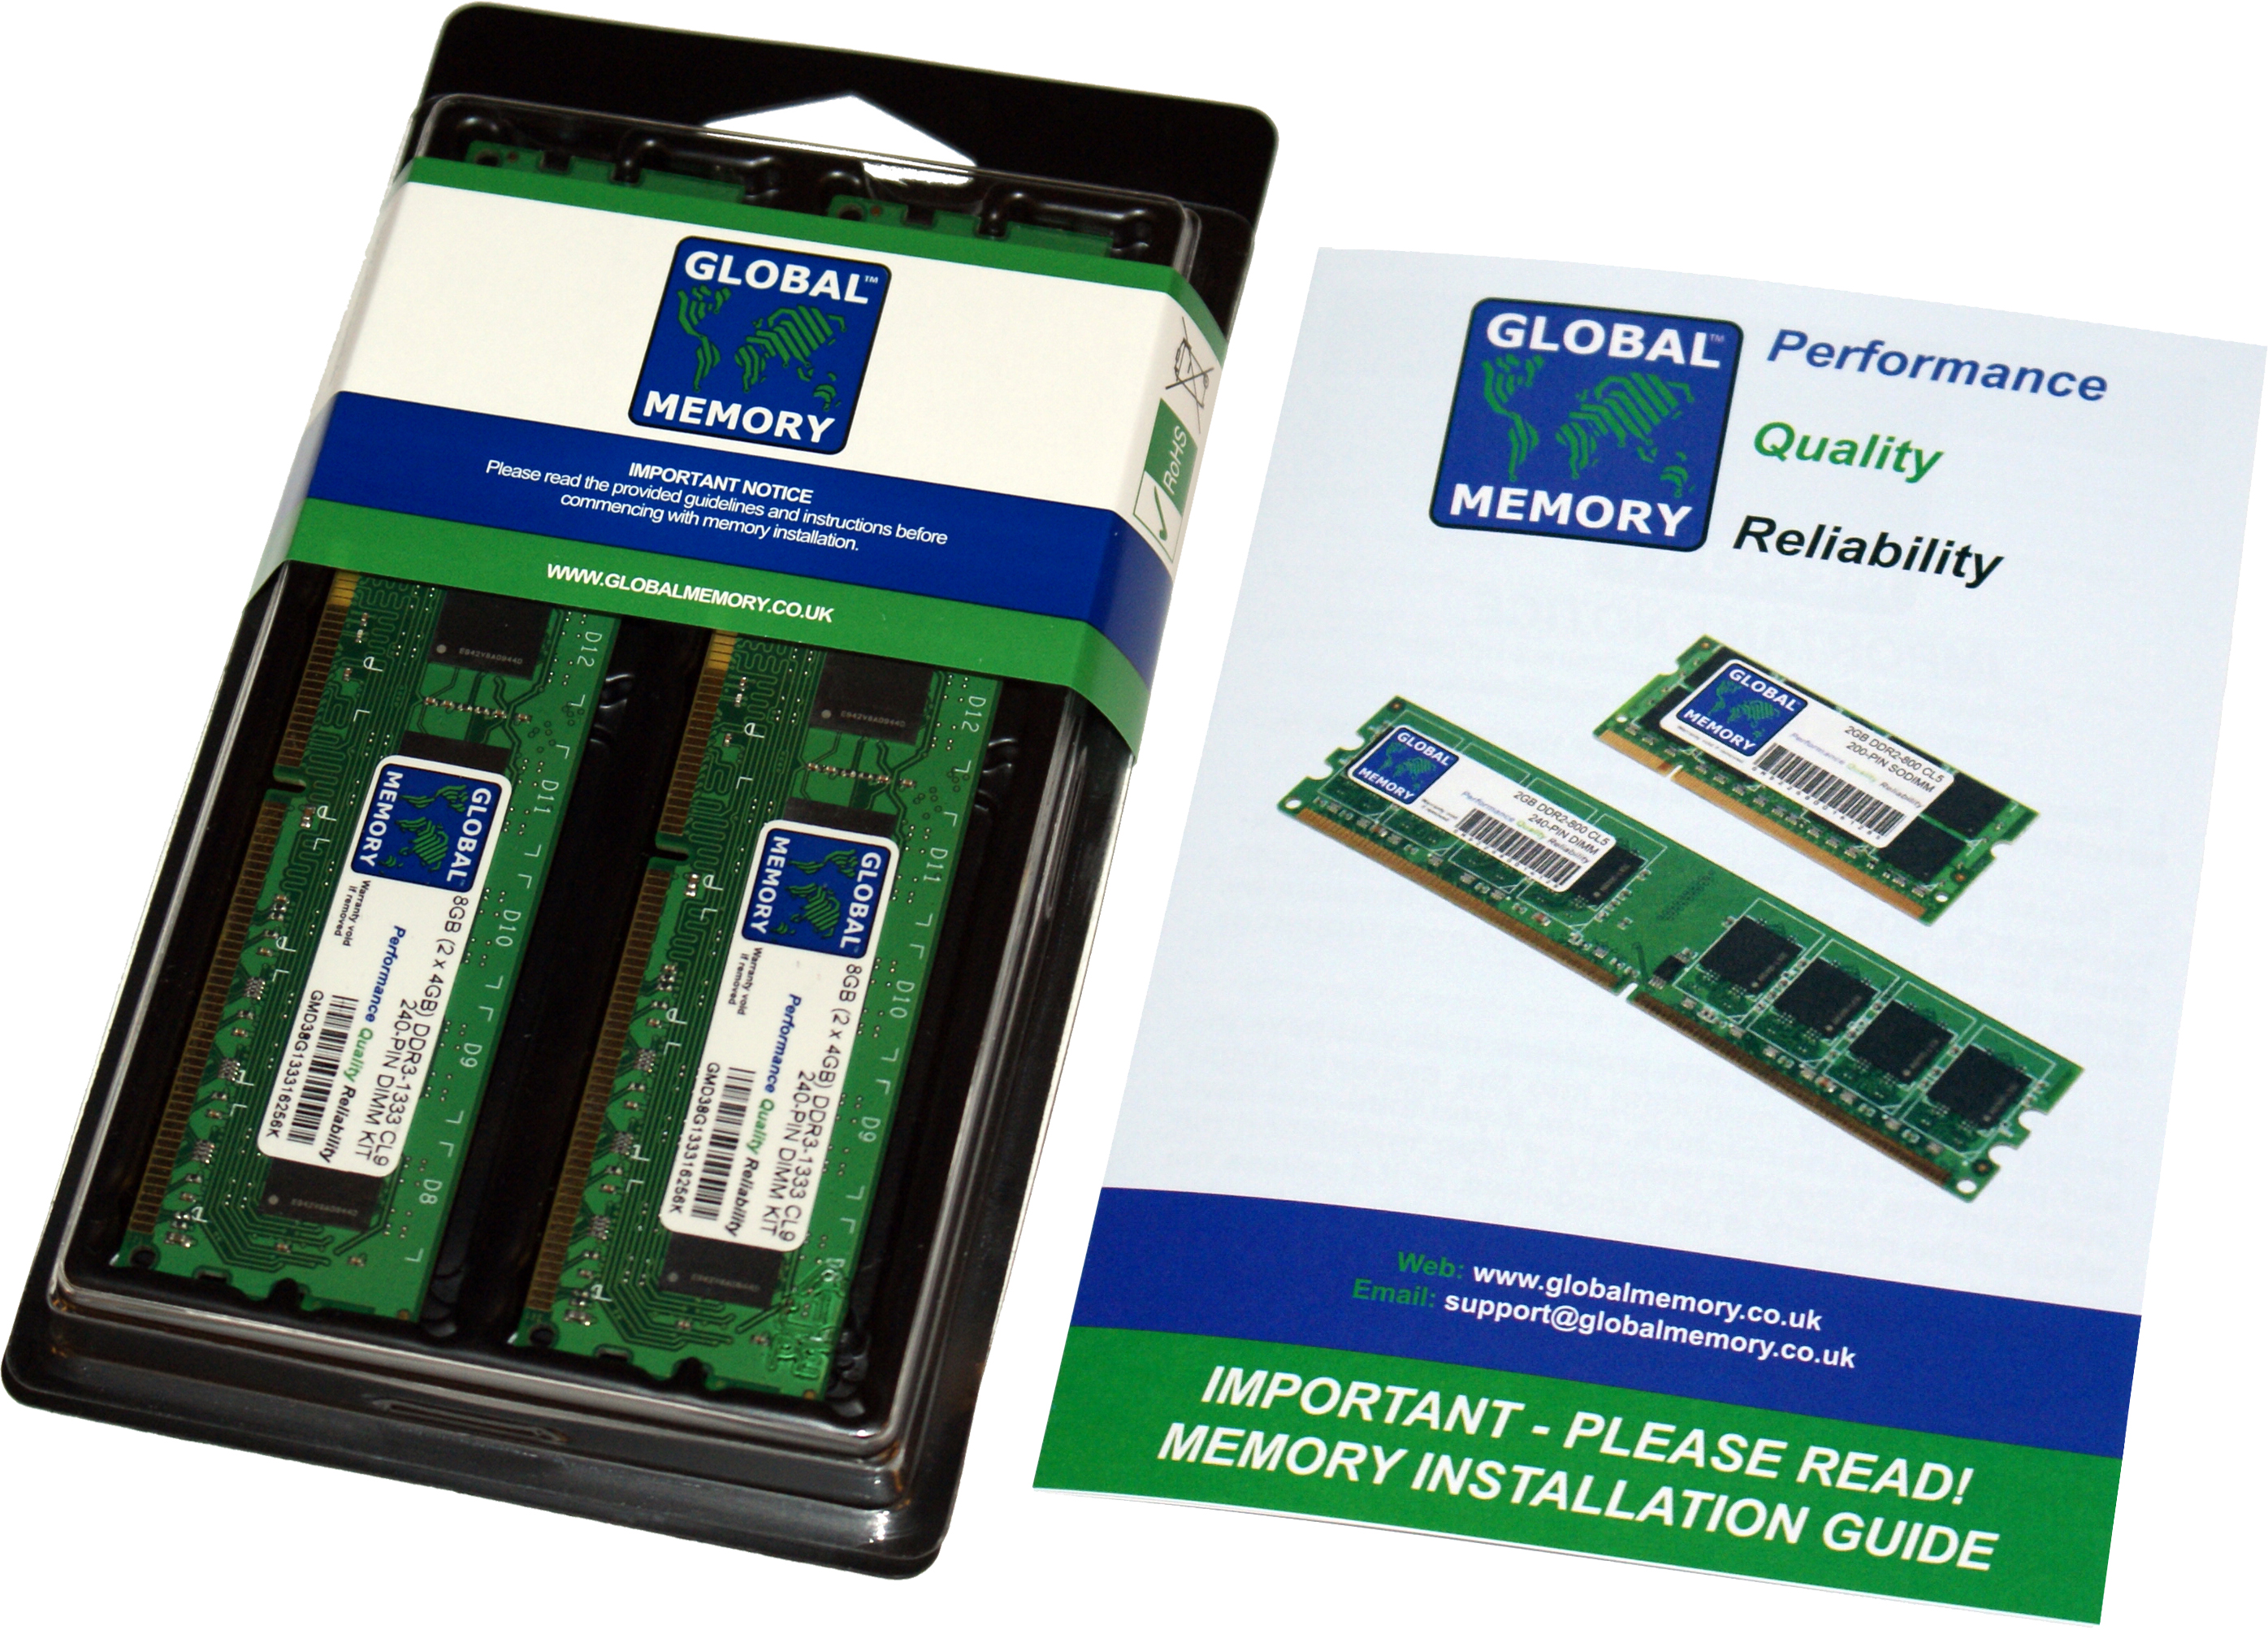 8GB (2 x 4GB) DDR4 2400MHz PC4-19200 288-PIN DIMM MEMORY RAM KIT FOR ACER PC DESKTOPS